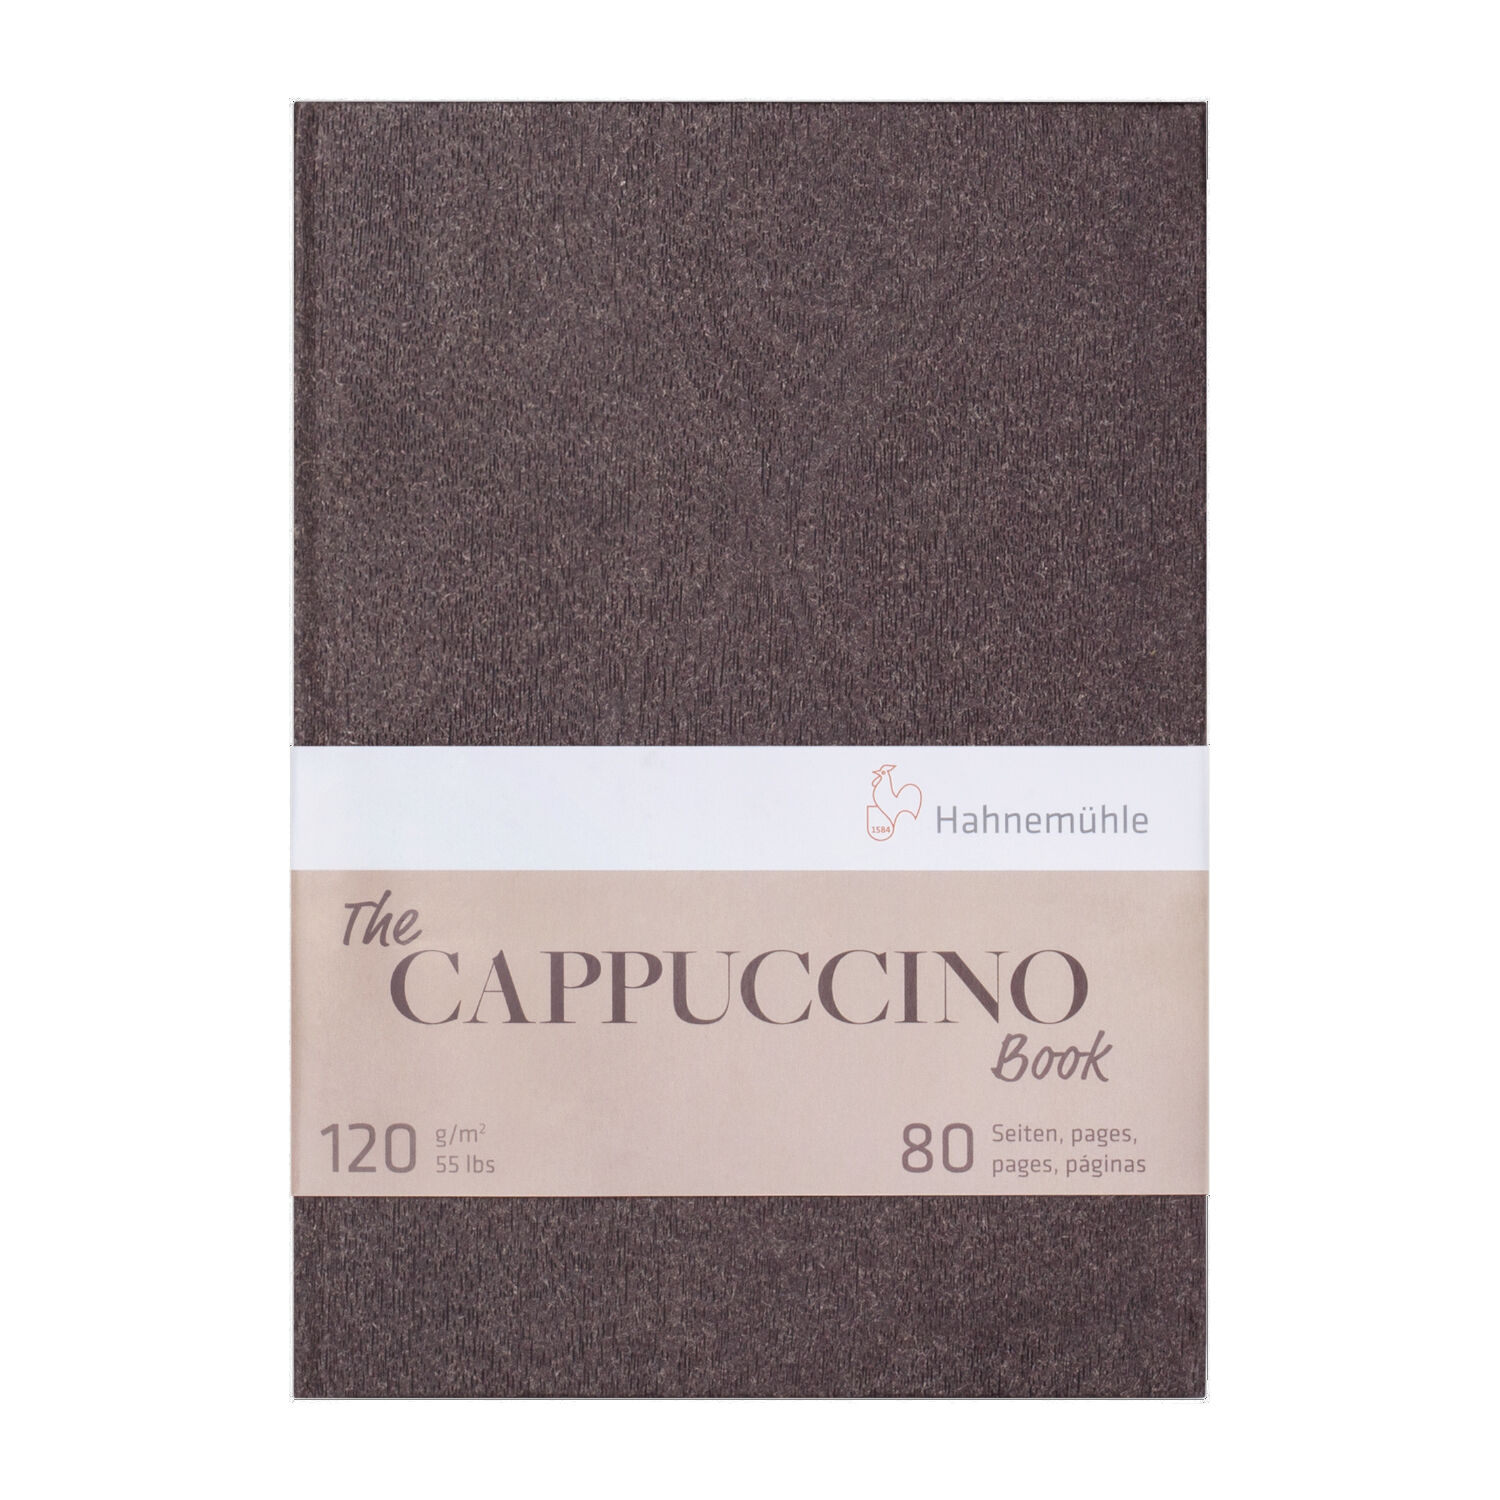 NEU Skizzenbuch The Cappuccino Book, 120g/m, DIN A5 Hochformat, 80 Seiten